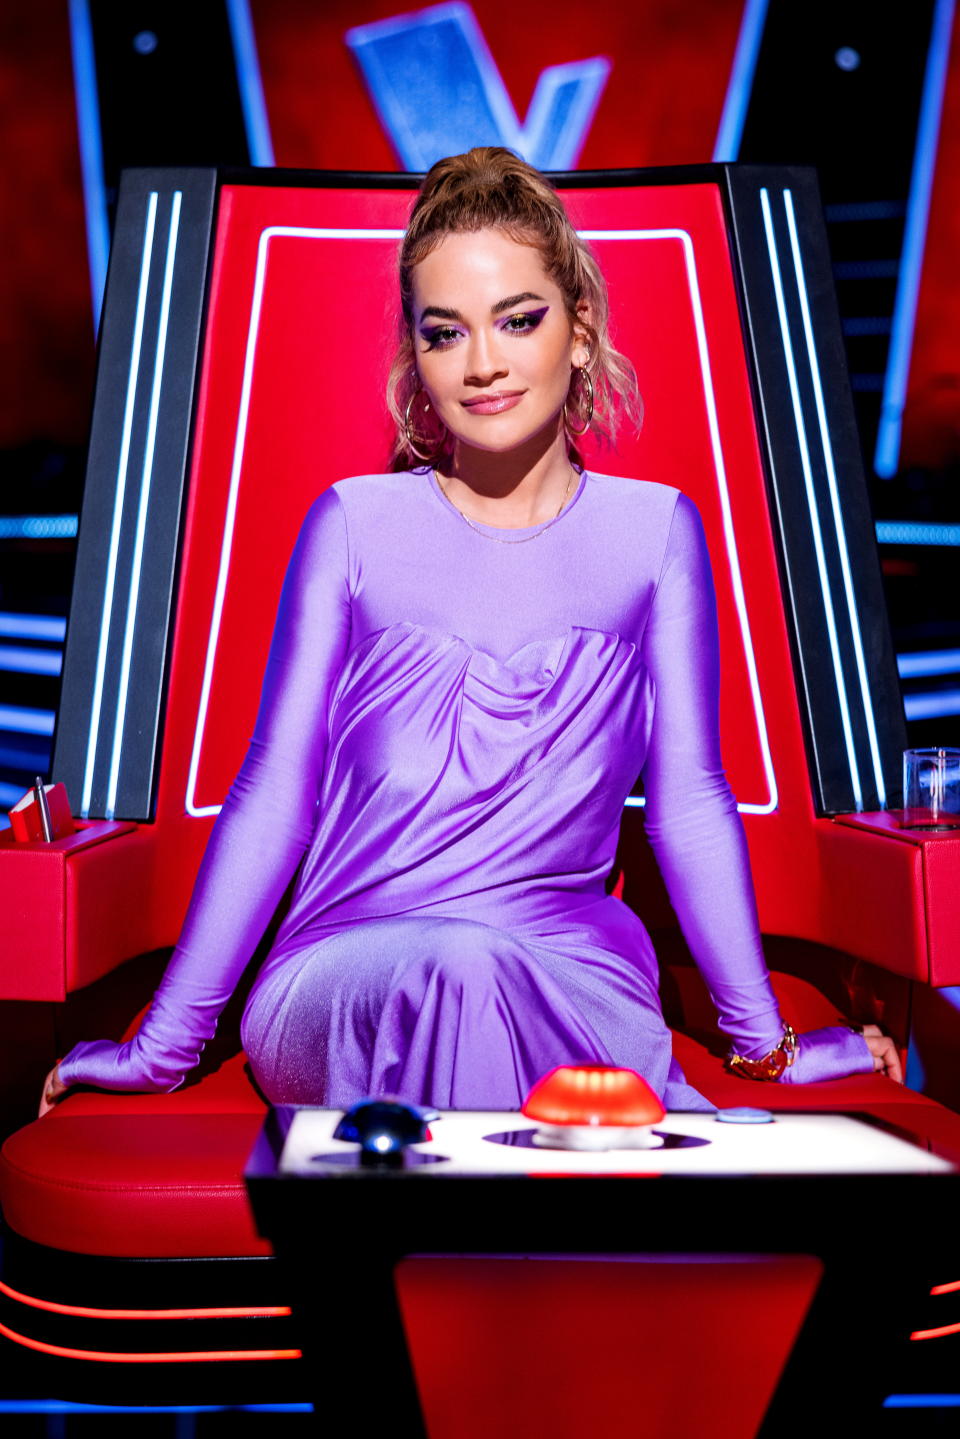 Rita Ora wears a purple slinky dress while judging The Voice